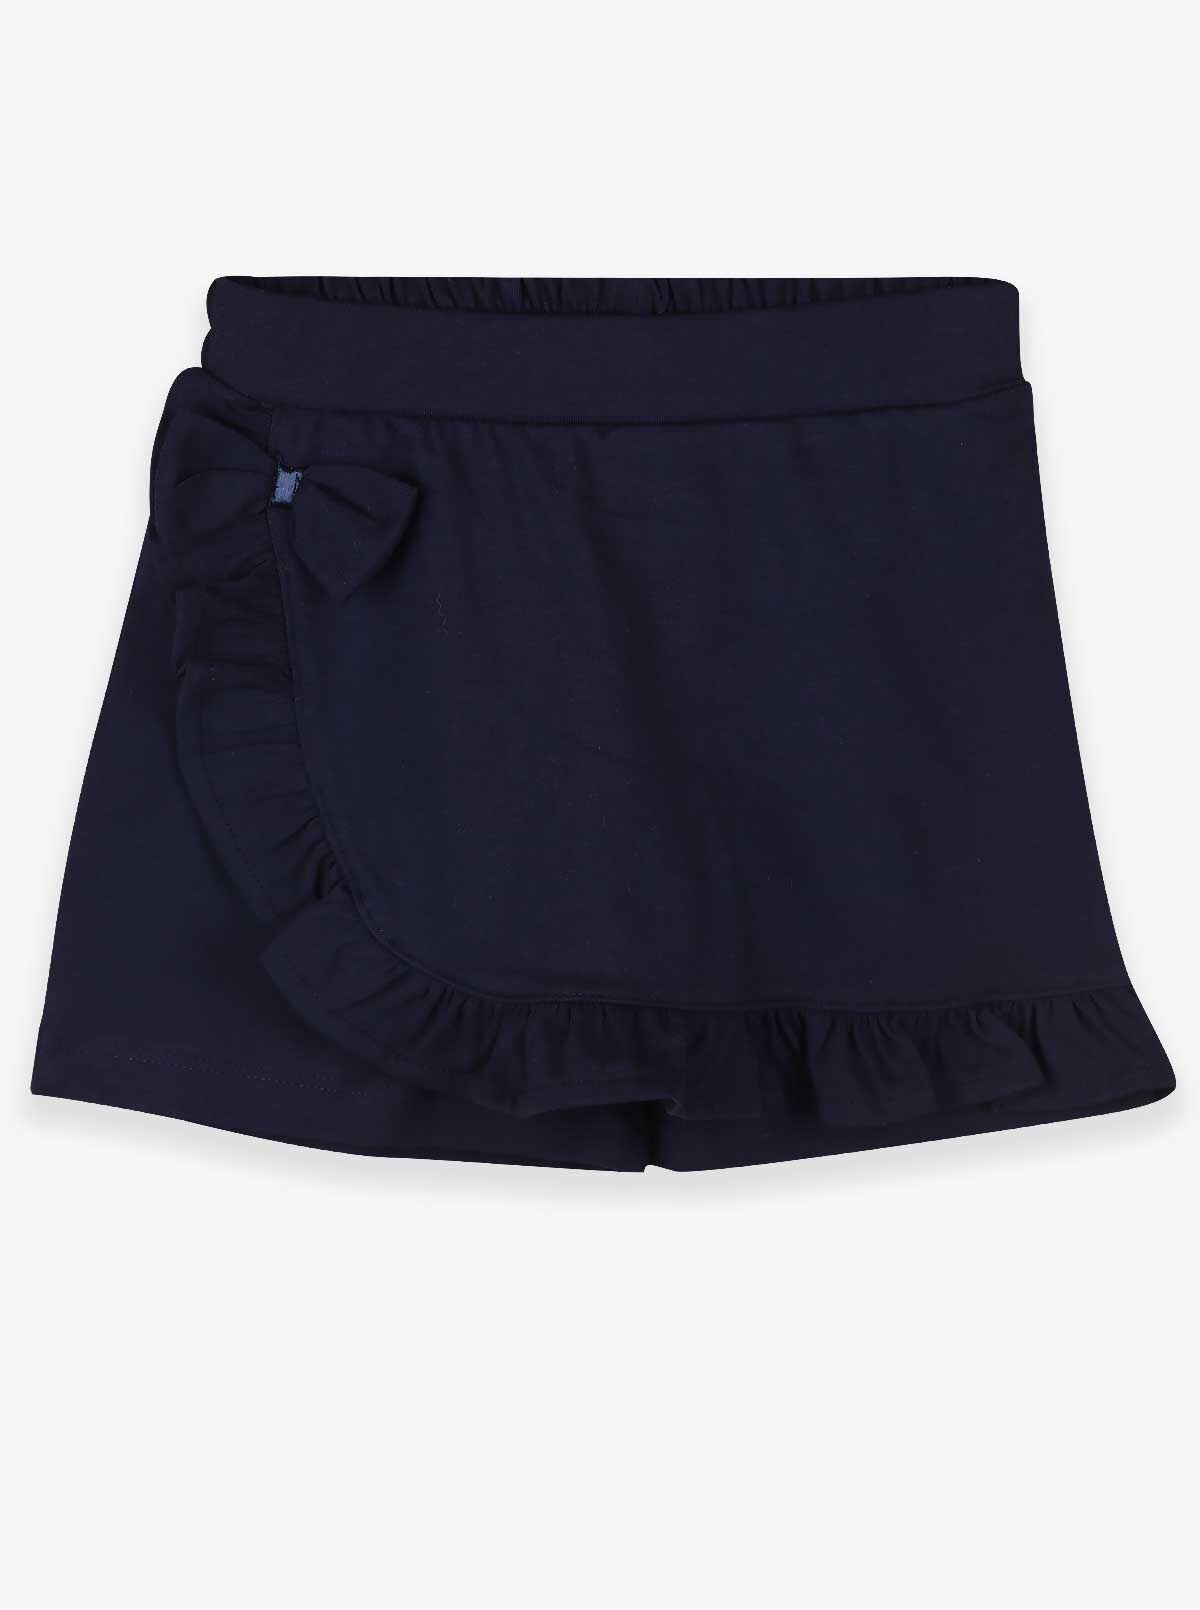 Юбка-шорты для девочки Breeze темно-синяя 15645 - цена